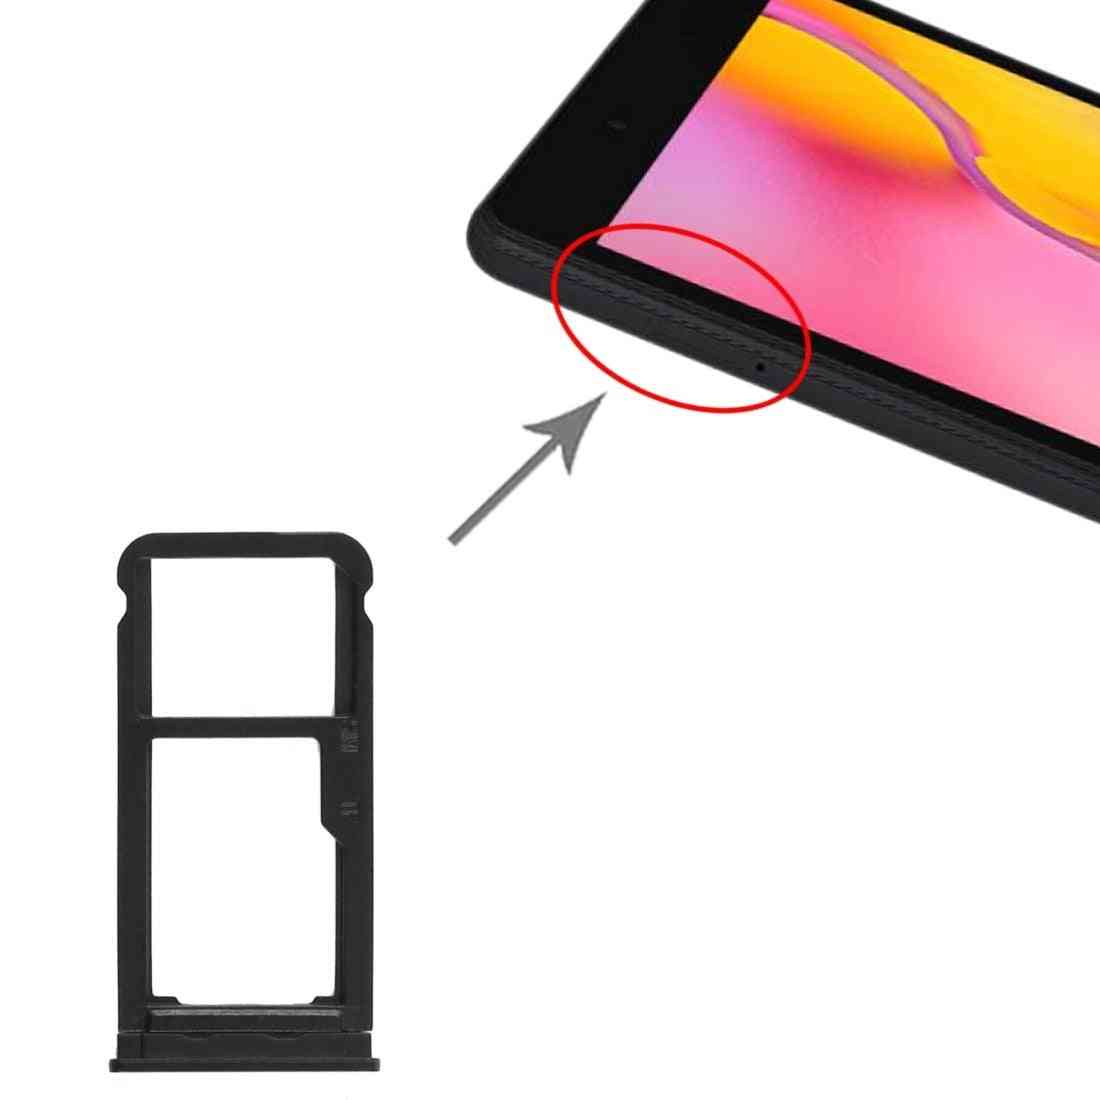 Adapter Tf Card Tray For Galaxy Tab